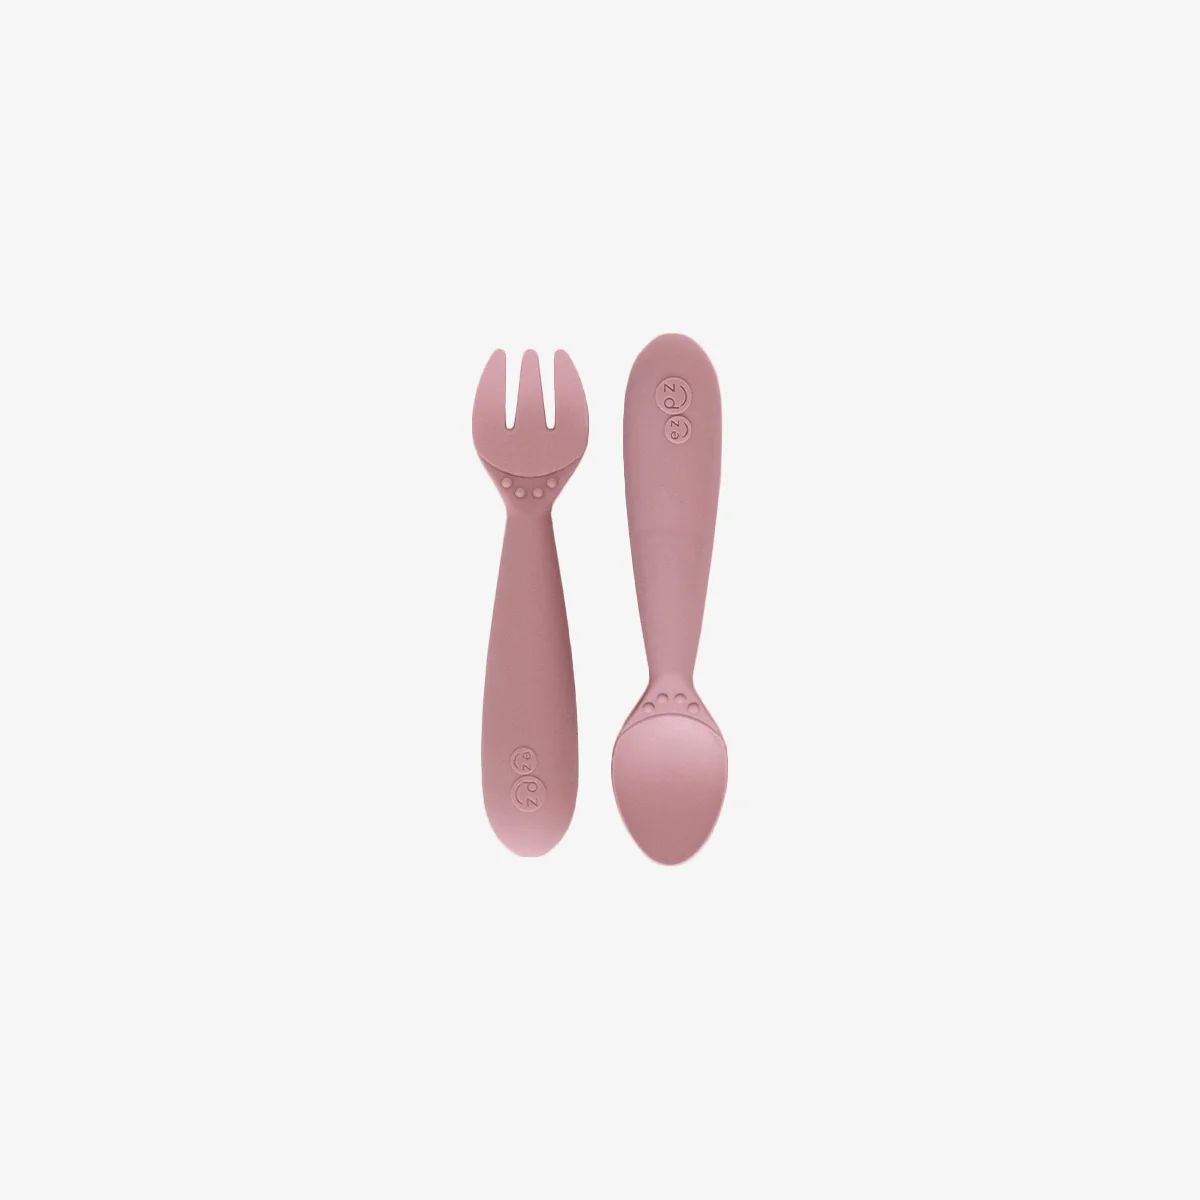 Mini Utensils by ezpz / Sensory Silicone Fork & Spoon for Toddlers | ezpz